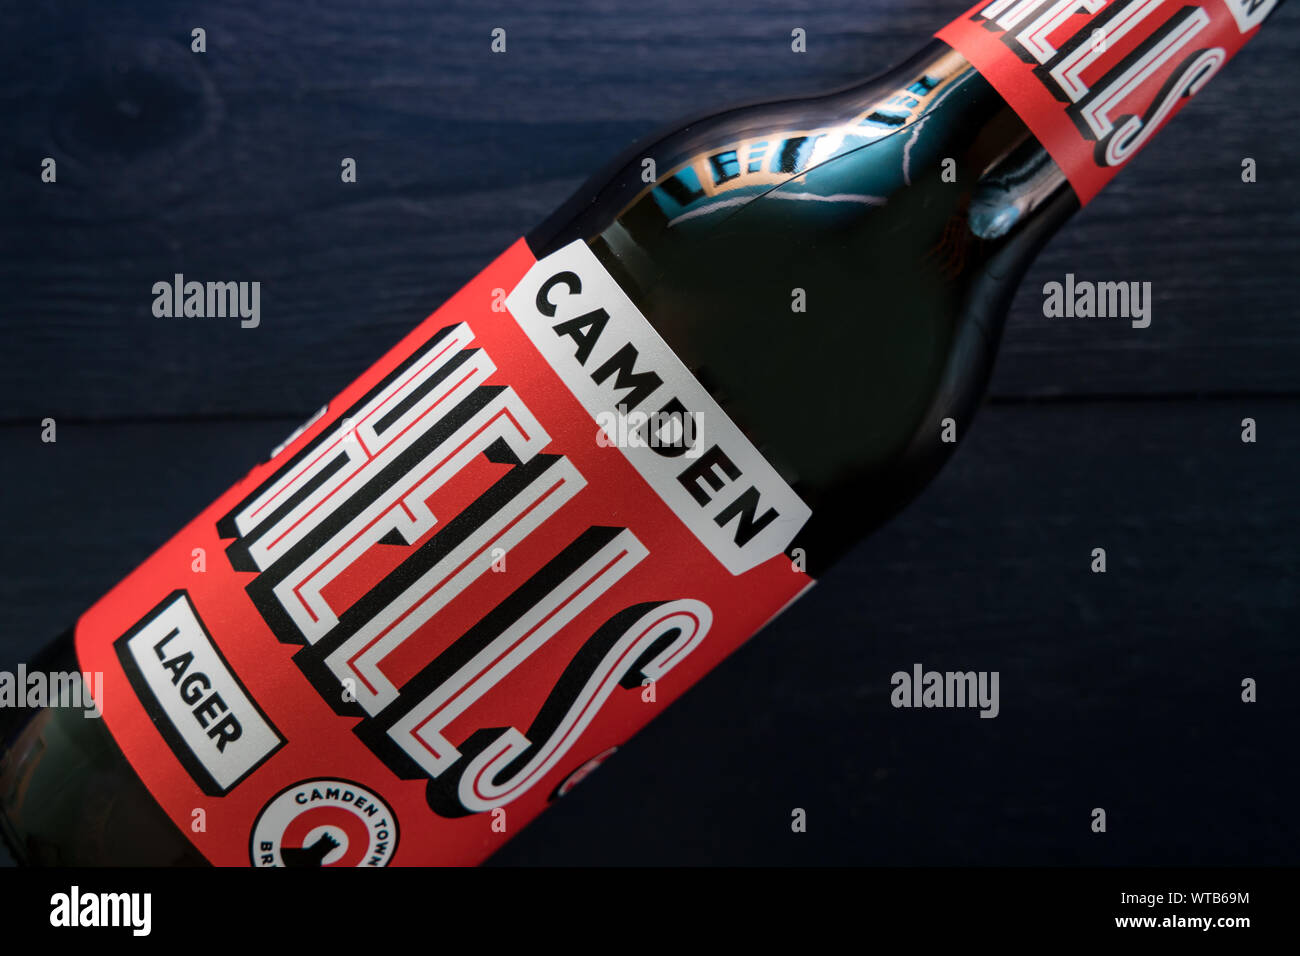 LONDON - SEPTEMBER 3, 2019: Camden Hells craft beer bottle on dark wood background Stock Photo